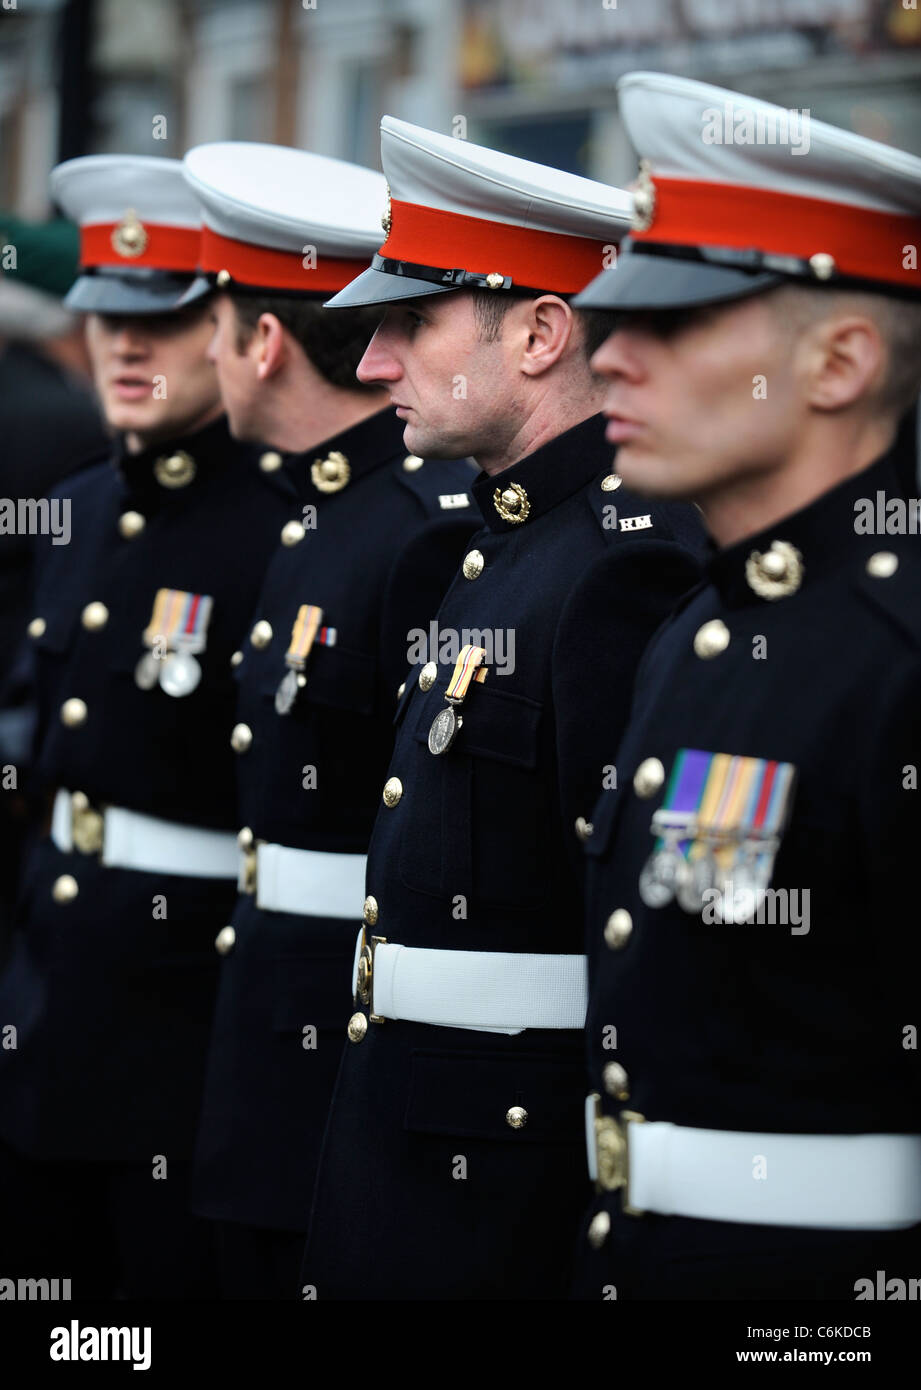 British royal marines uniform hi-res stock photography and images - Alamy